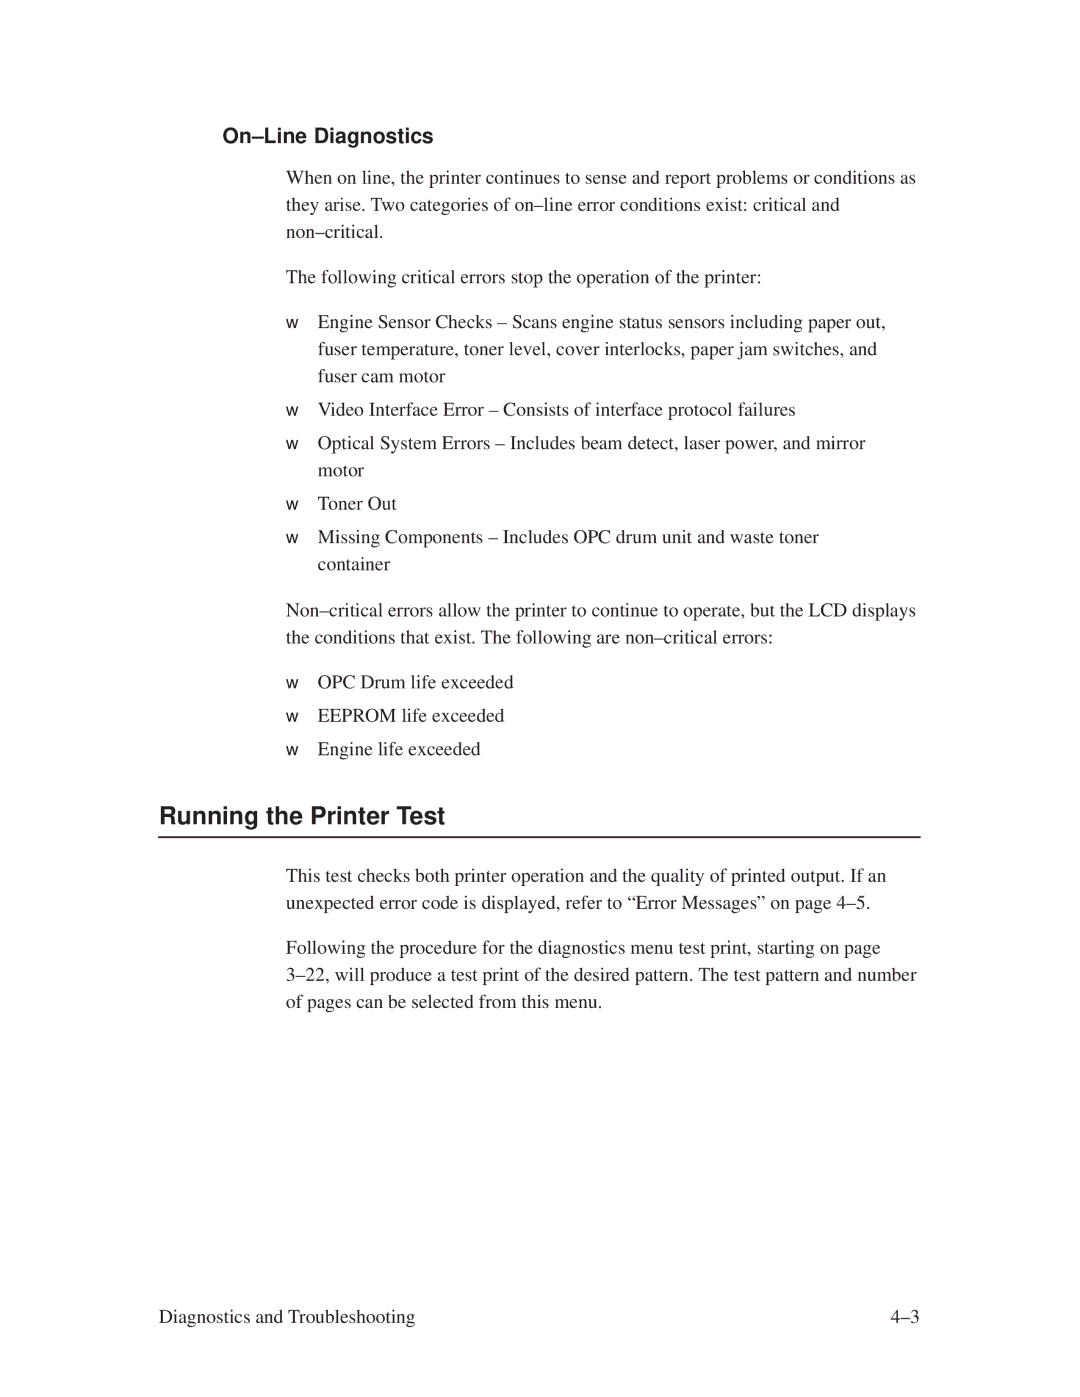 Printronix L1024 manual Running the Printer Test, On±Line Diagnostics 